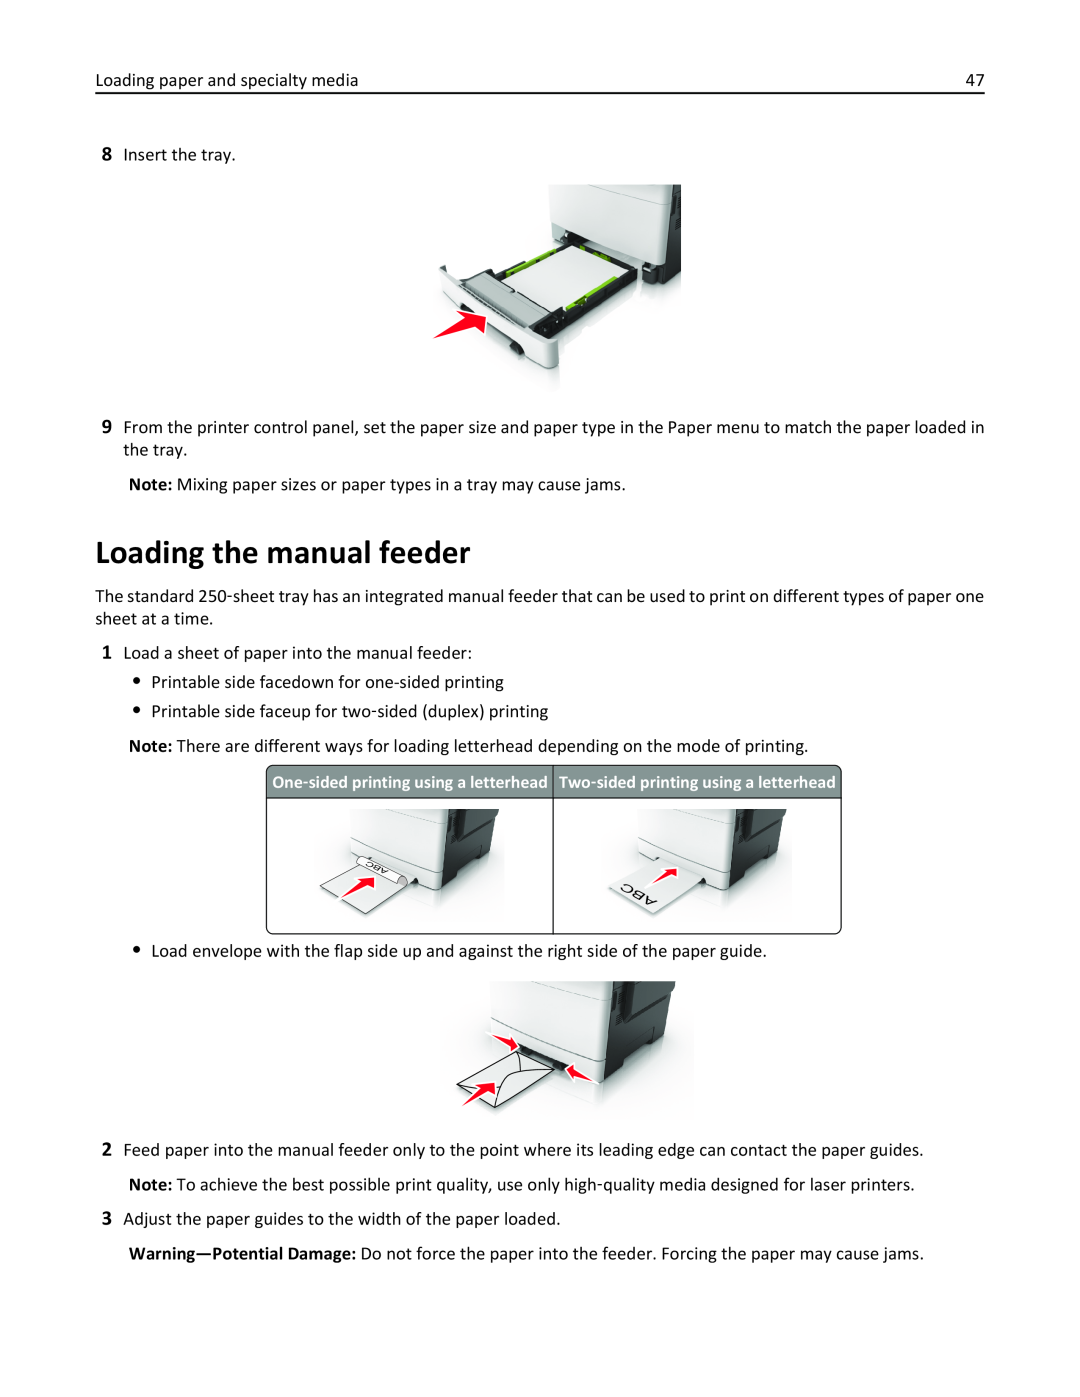 Lexmark 436 Loading the manual feeder, One ‑sided printing using a letterhead, Two ‑sided printing using a letterhead 